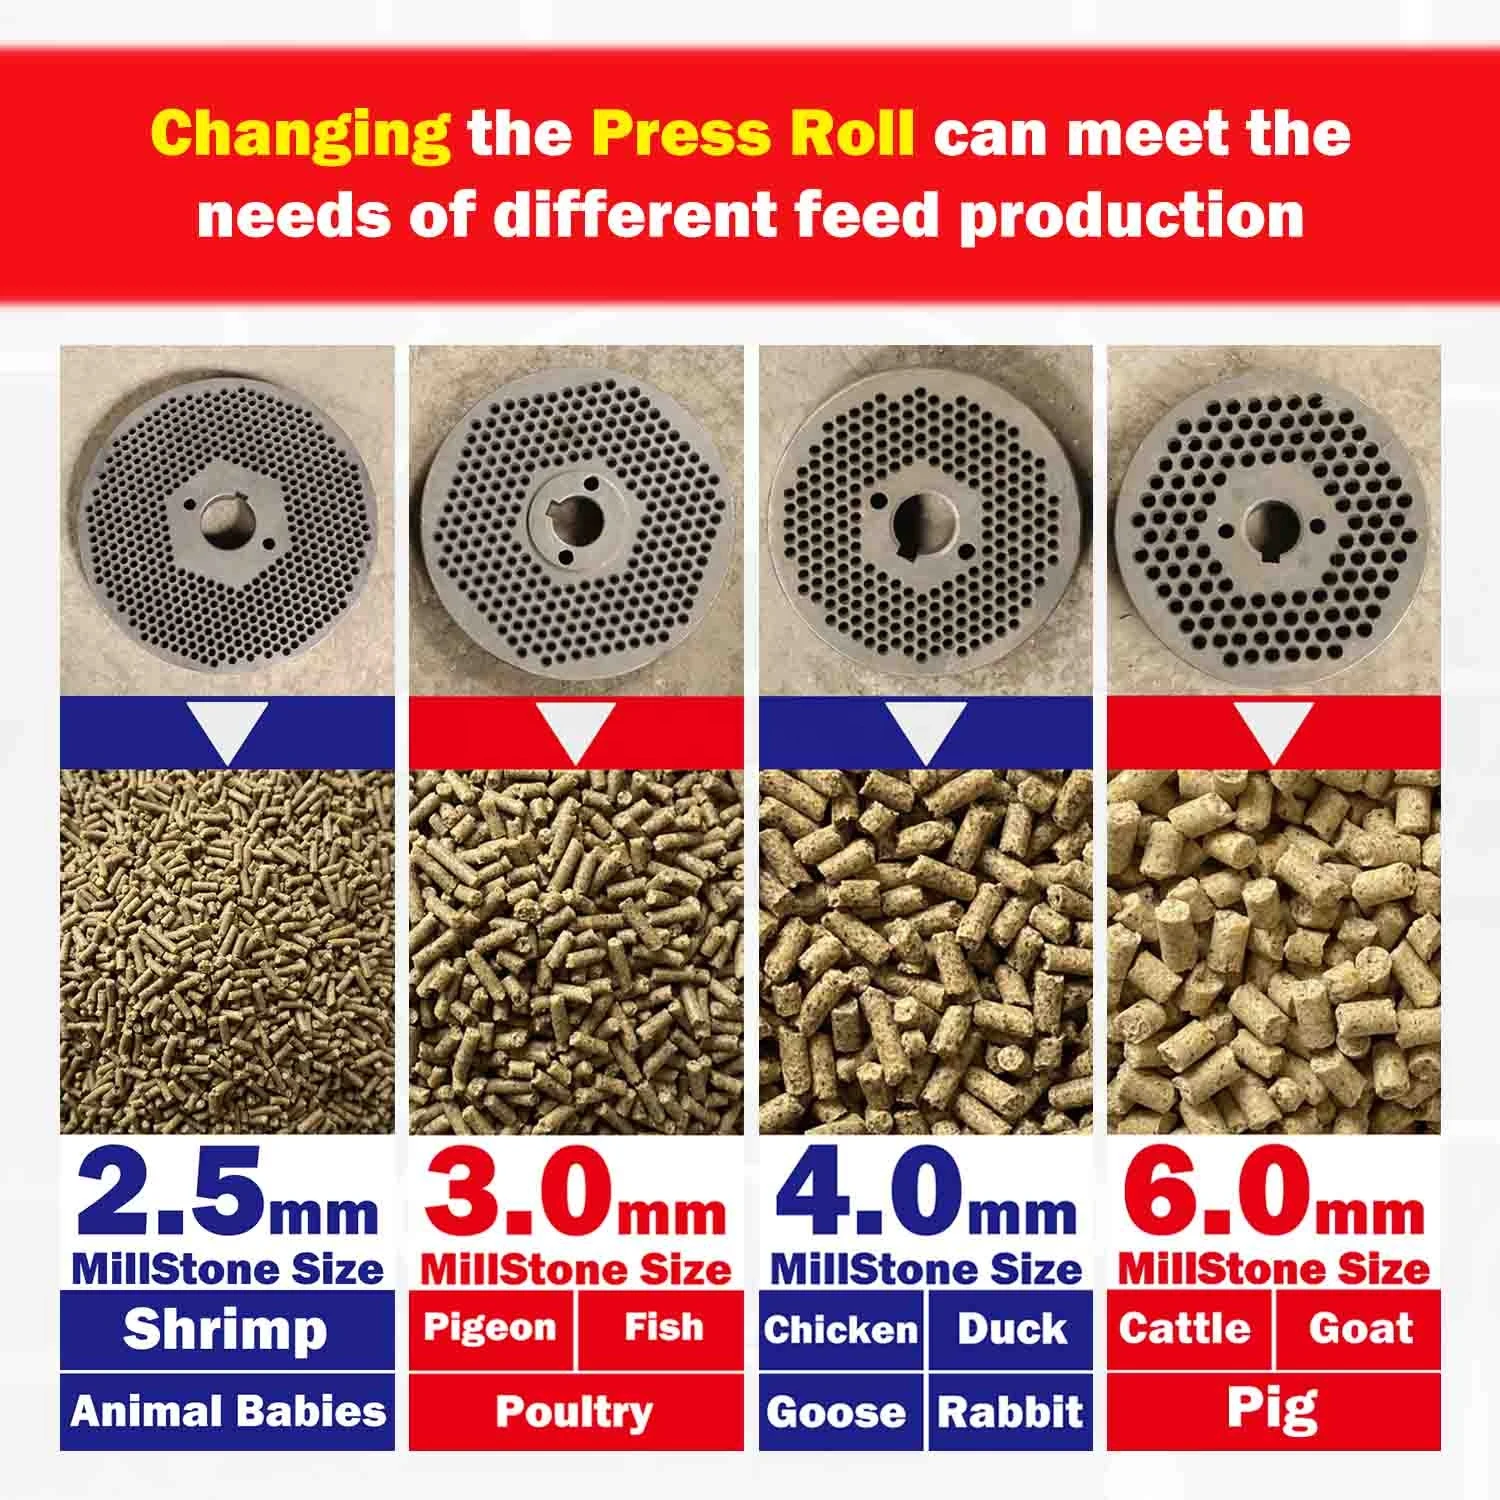 pellet machine of animal feed/floating fish feed processing machine/fish feed pellet machine price